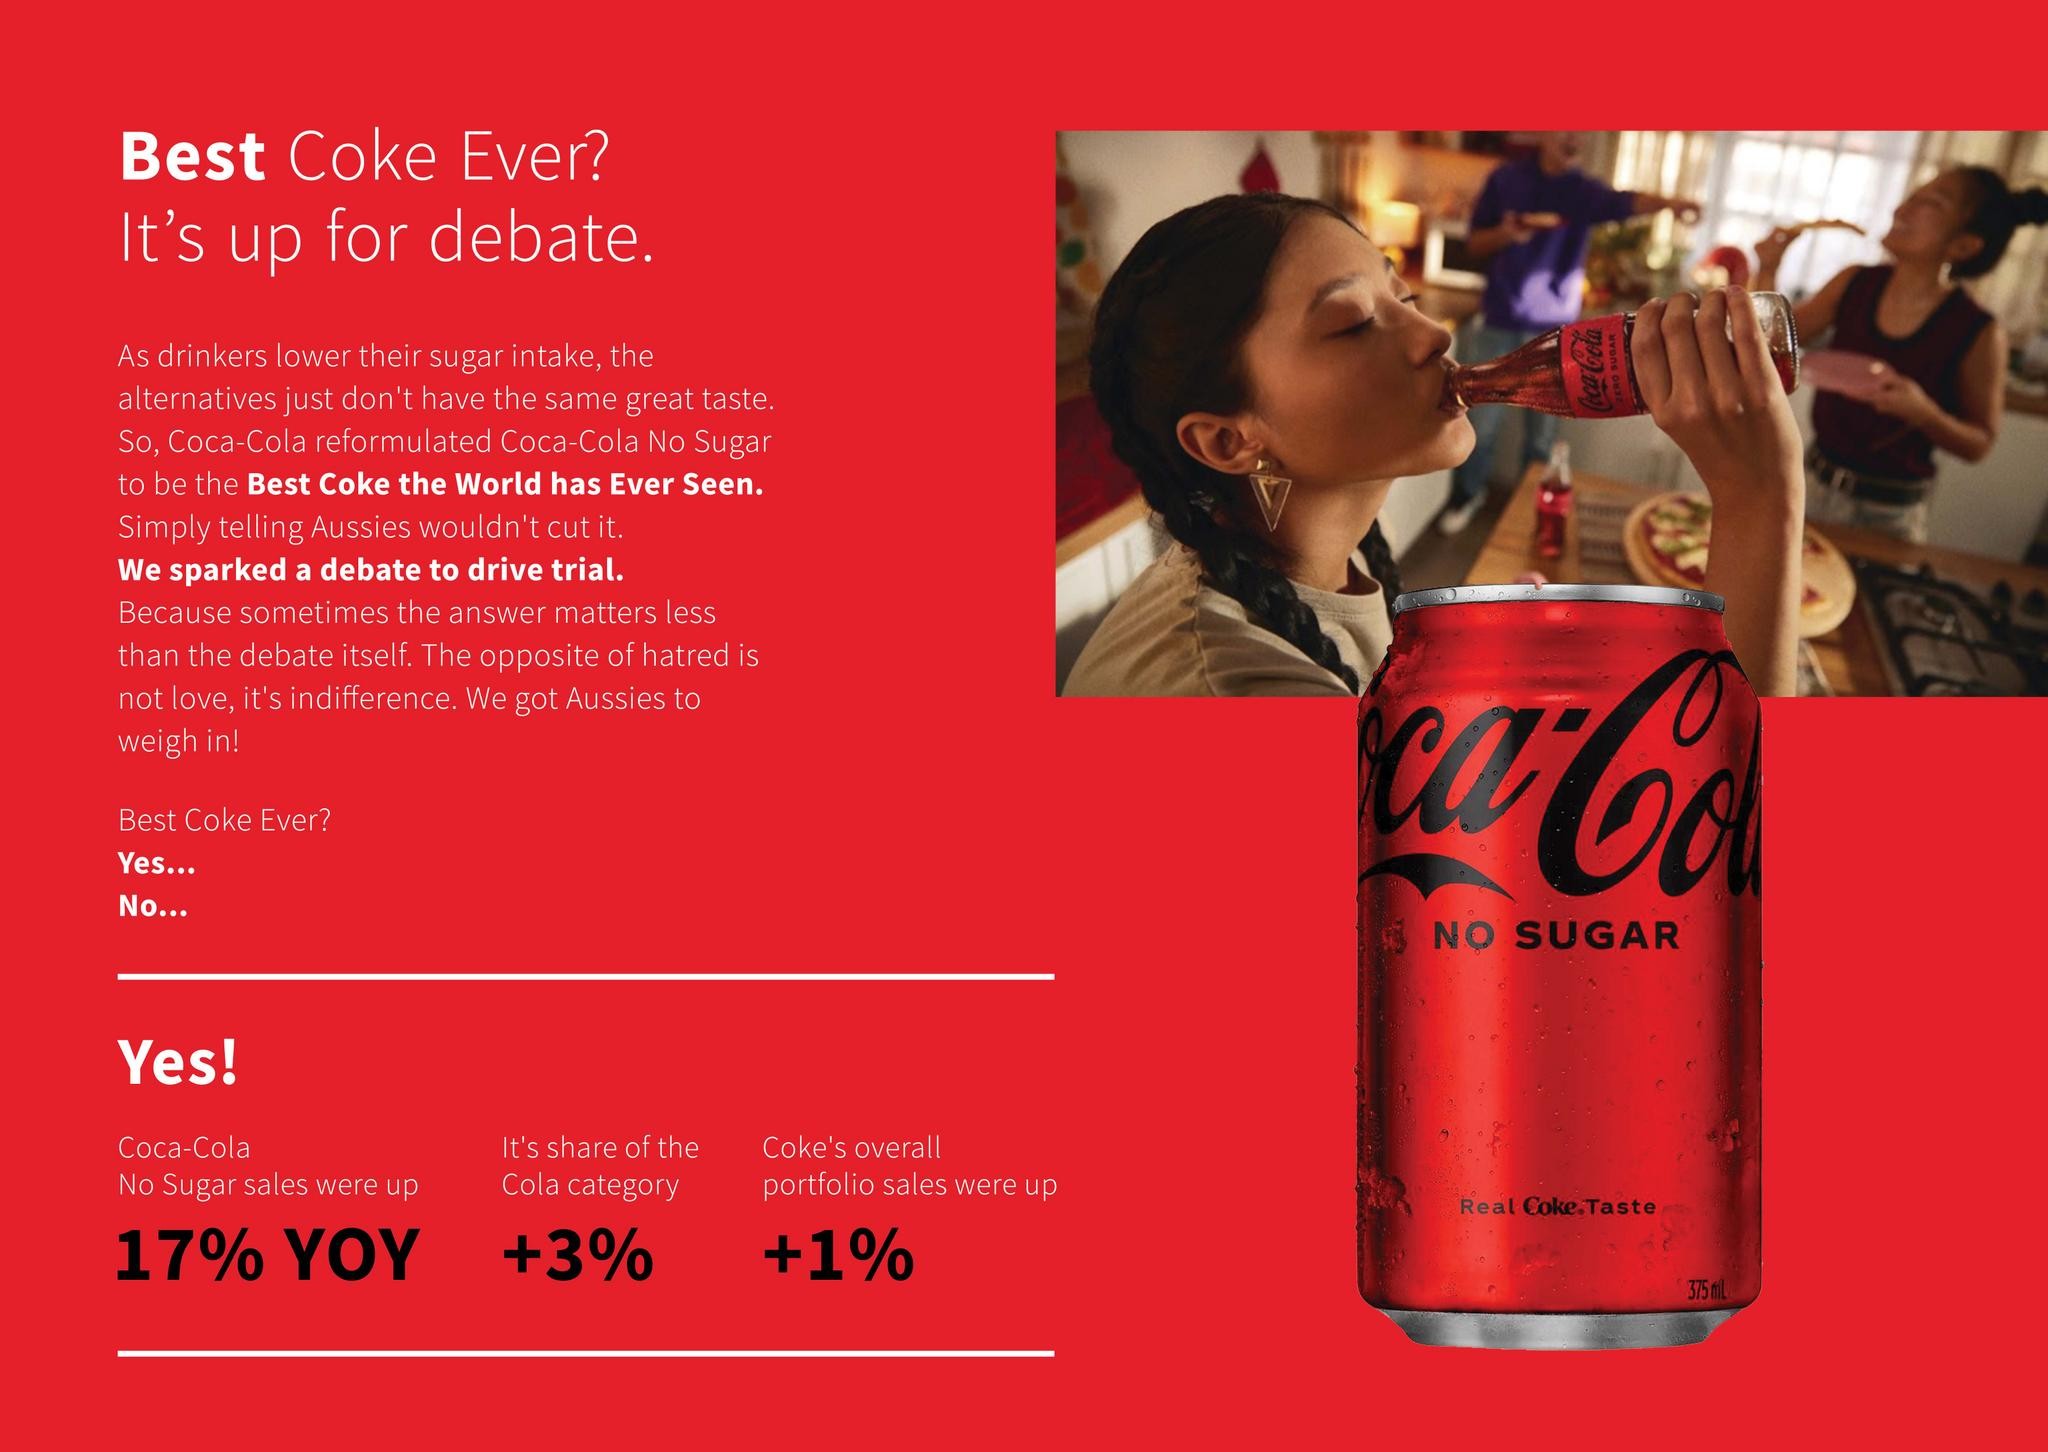 Best Coke Ever? It’s up for debate.